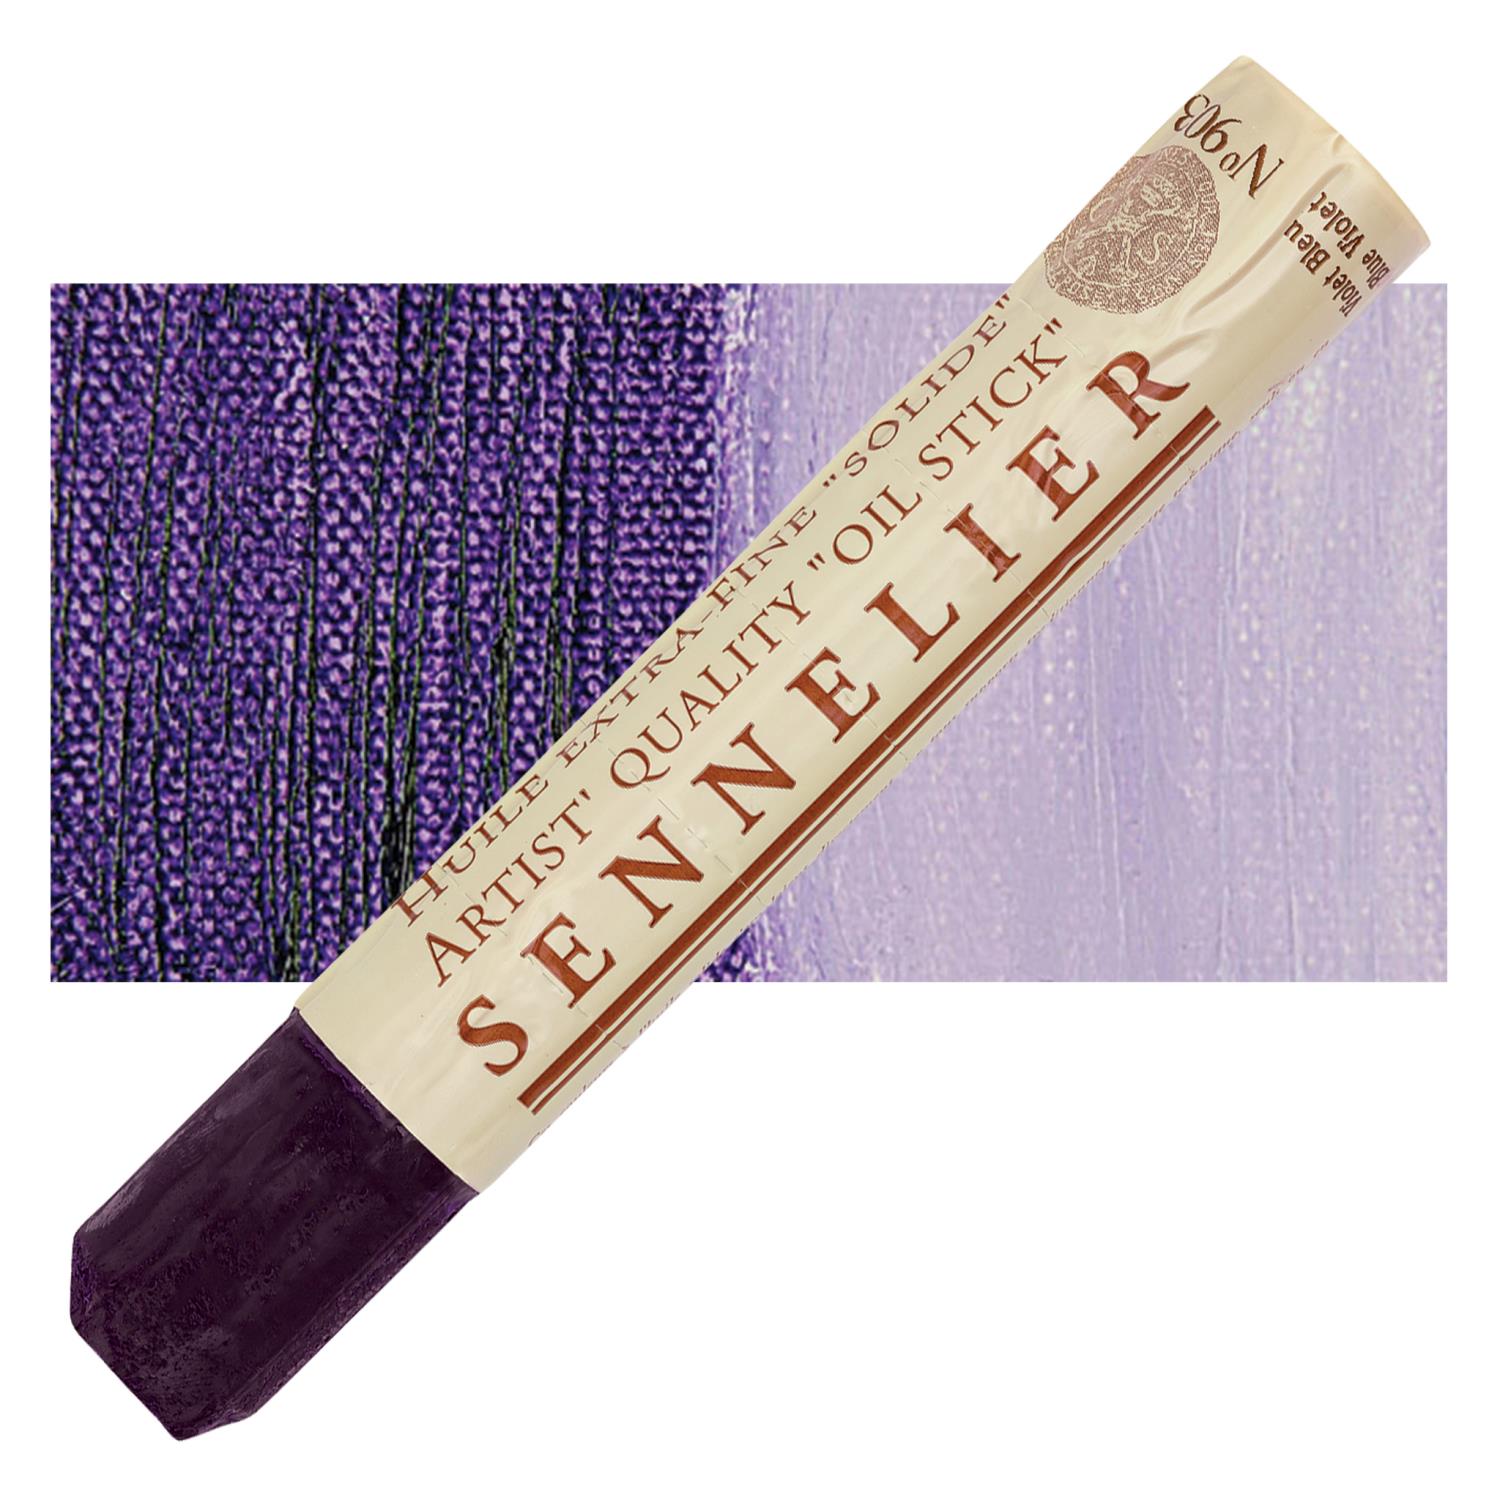 Sennelier Artist Oil Stick 38ml - 903 Blue Violet S1 utgår